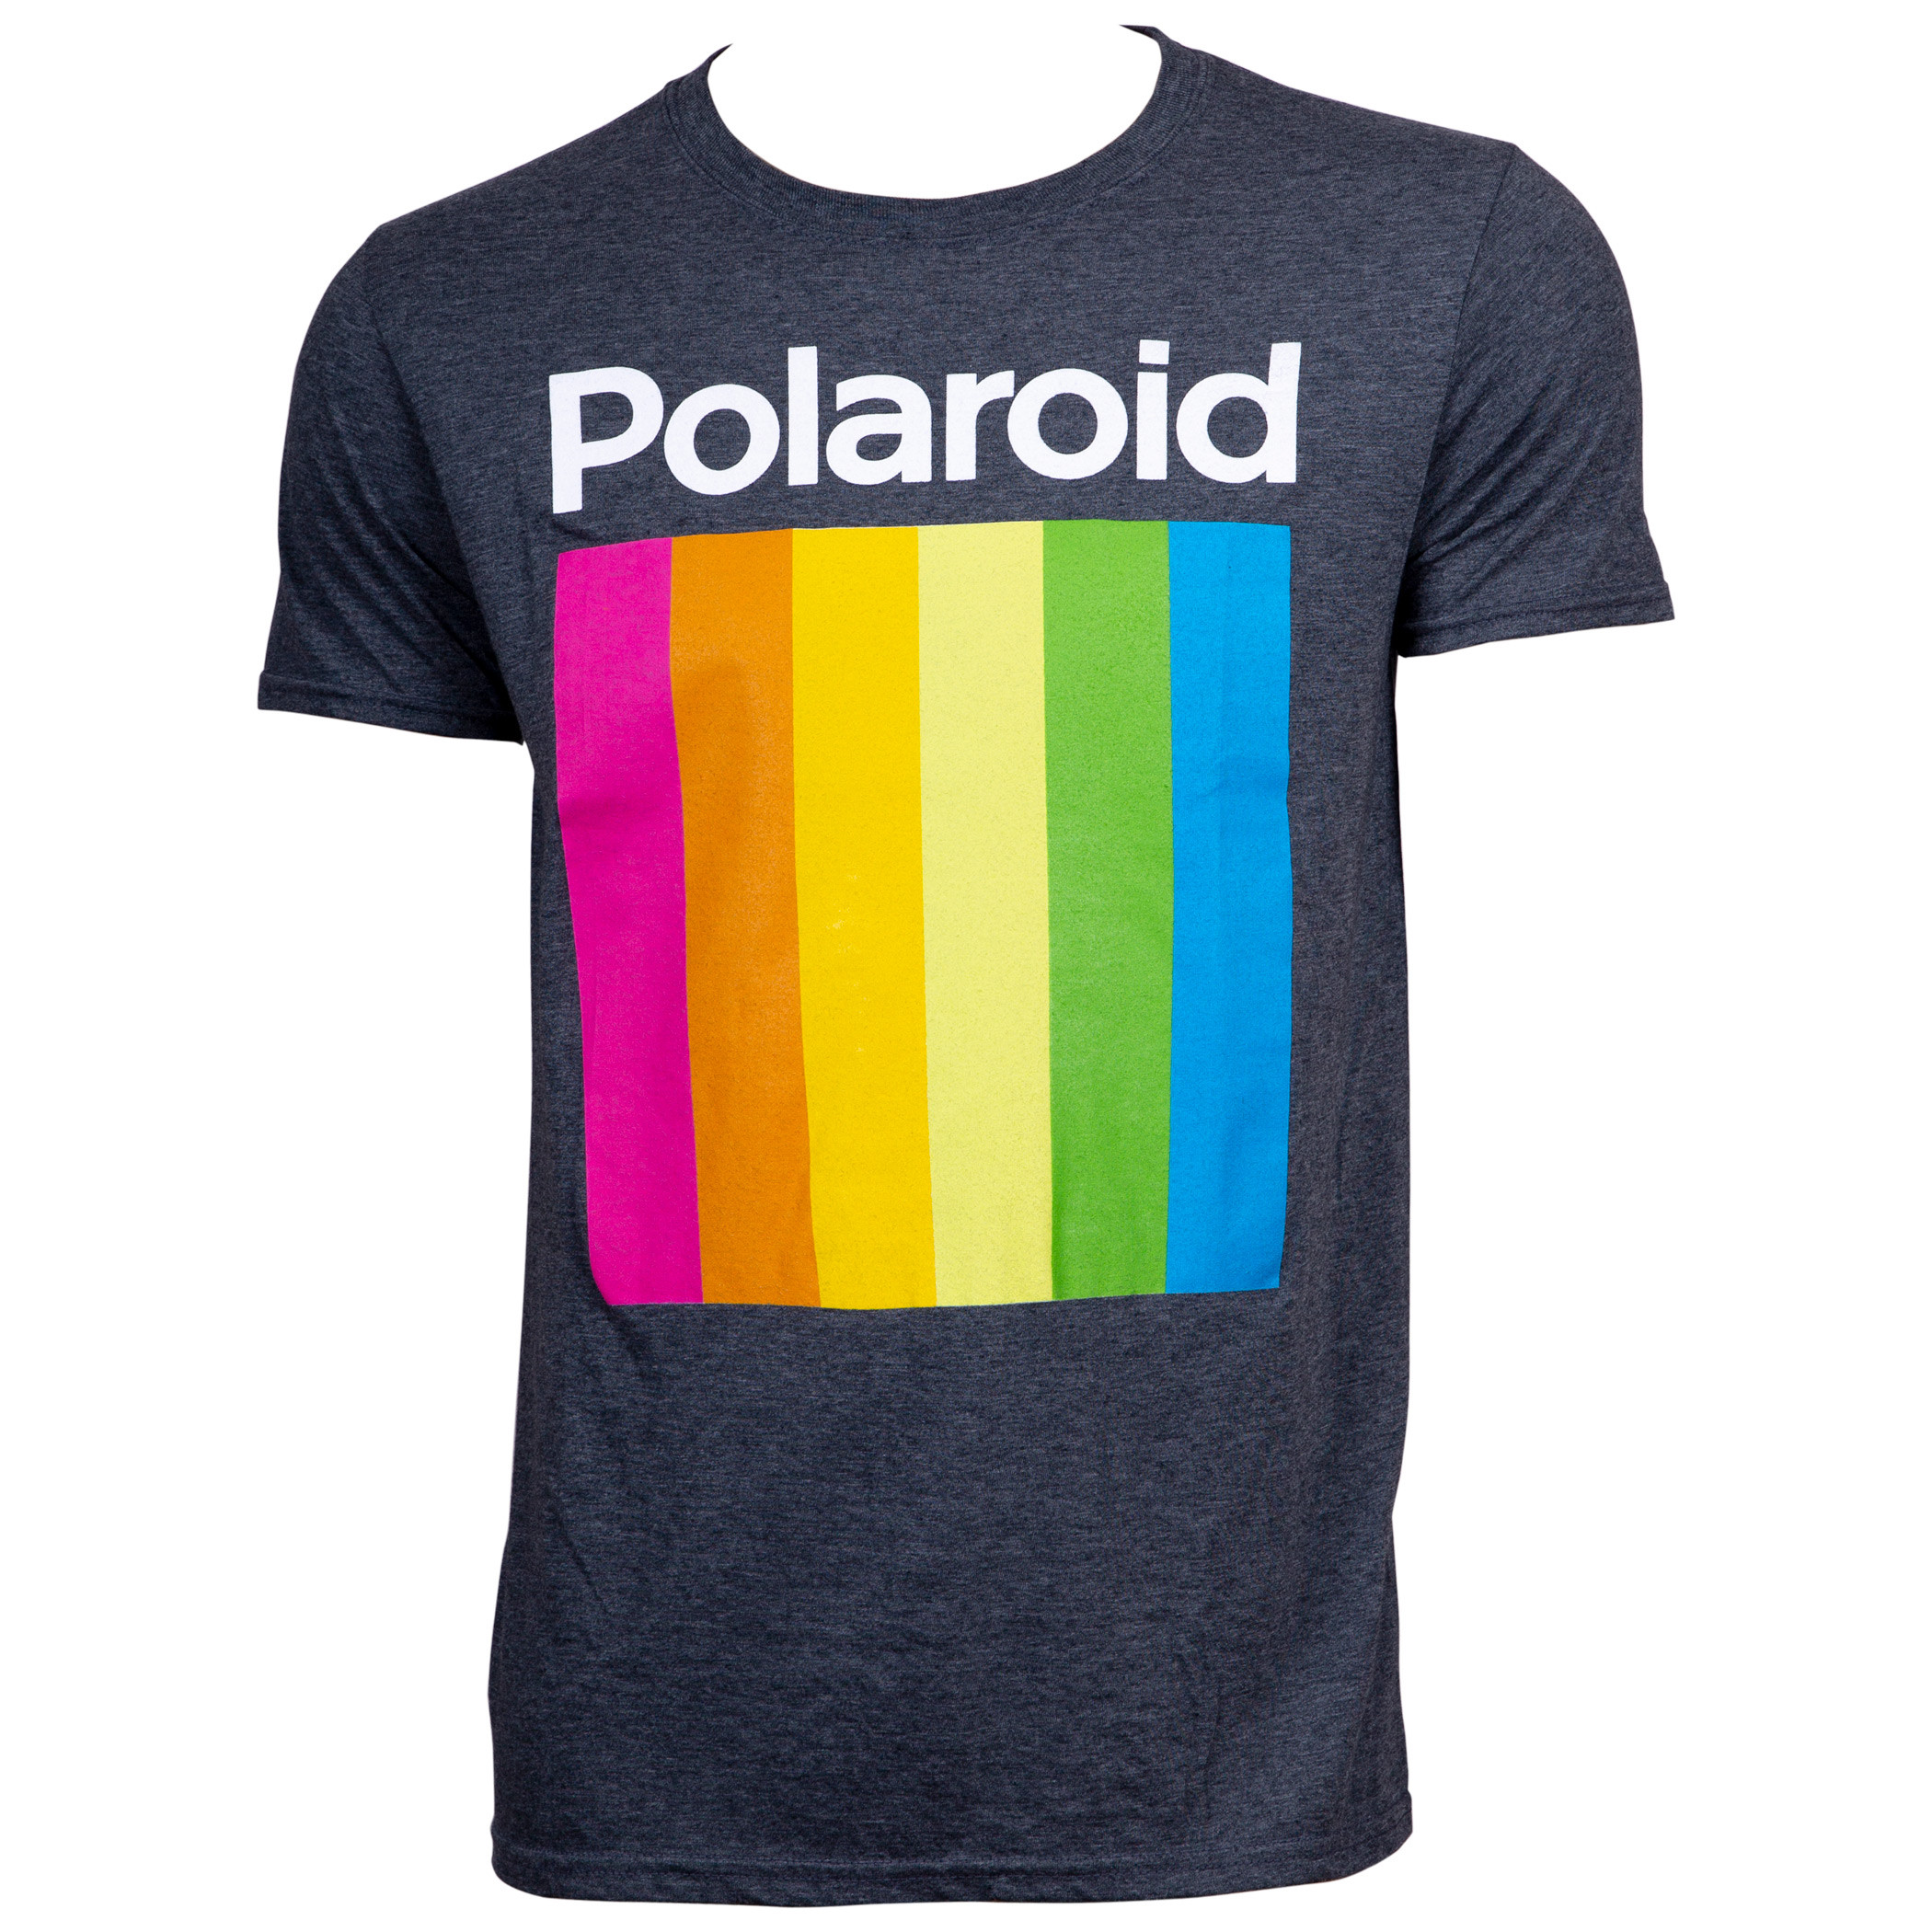 Polaroid t-shirt 